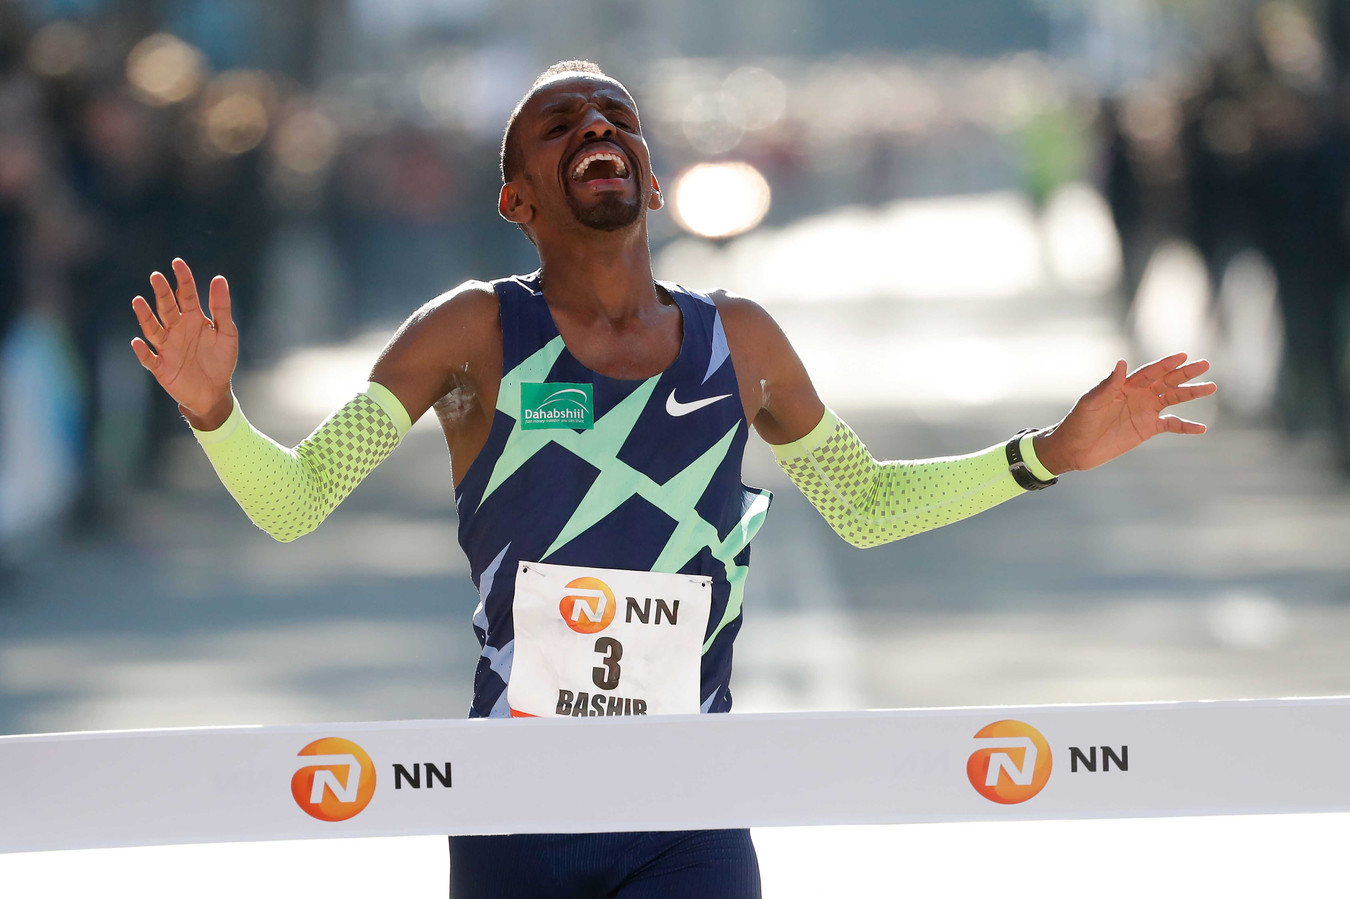 Abdi Bashir uit Belgie wint de Rotterdam Marathon.